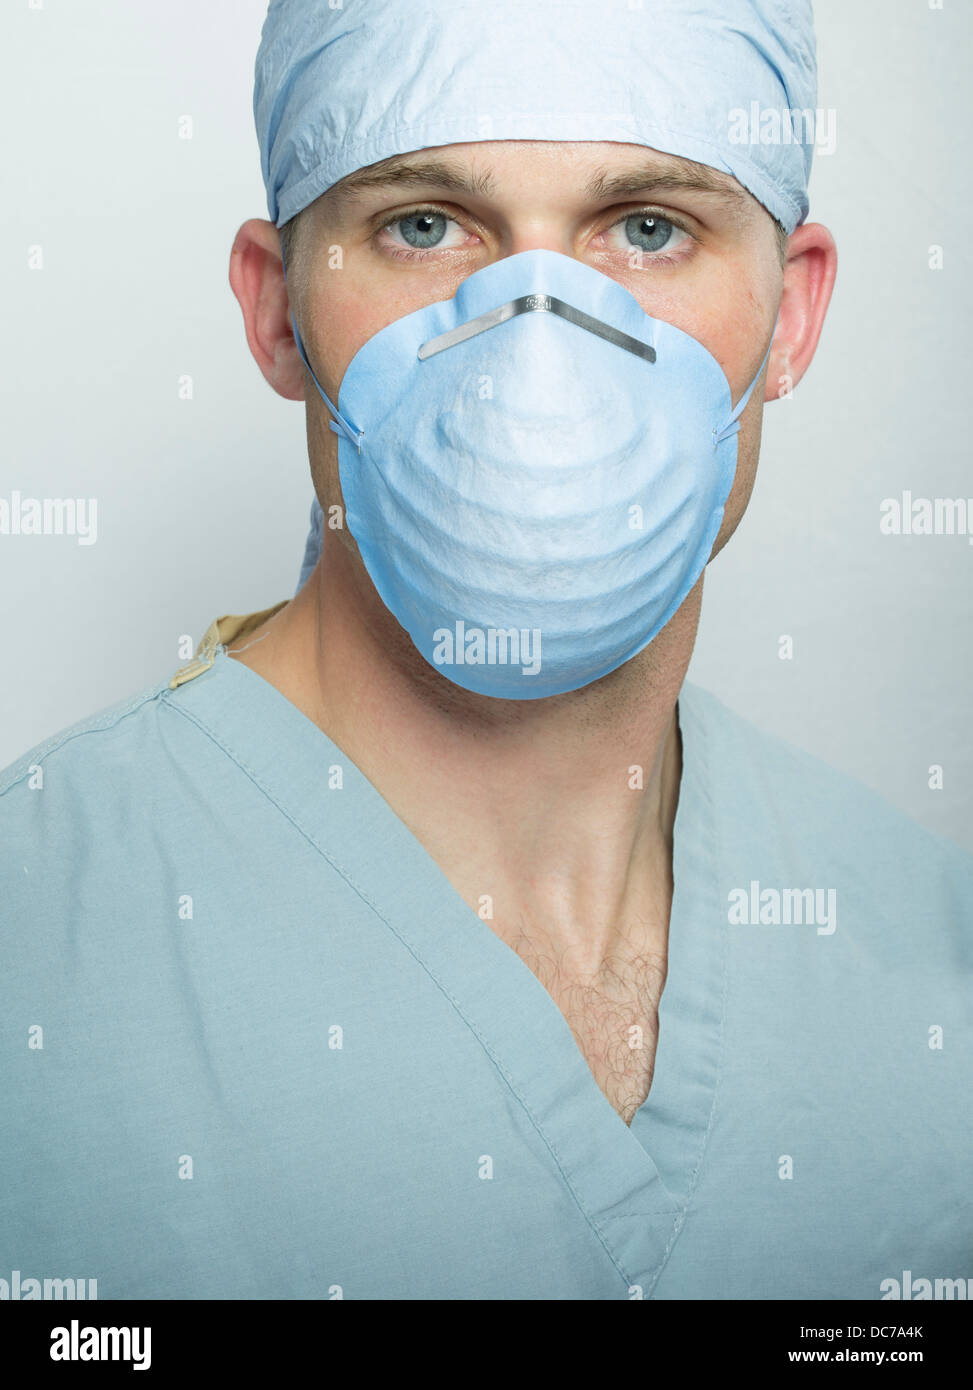 Maschio / medico chirurgo indossando hat, chirurgico scrubs e maschera. Foto Stock